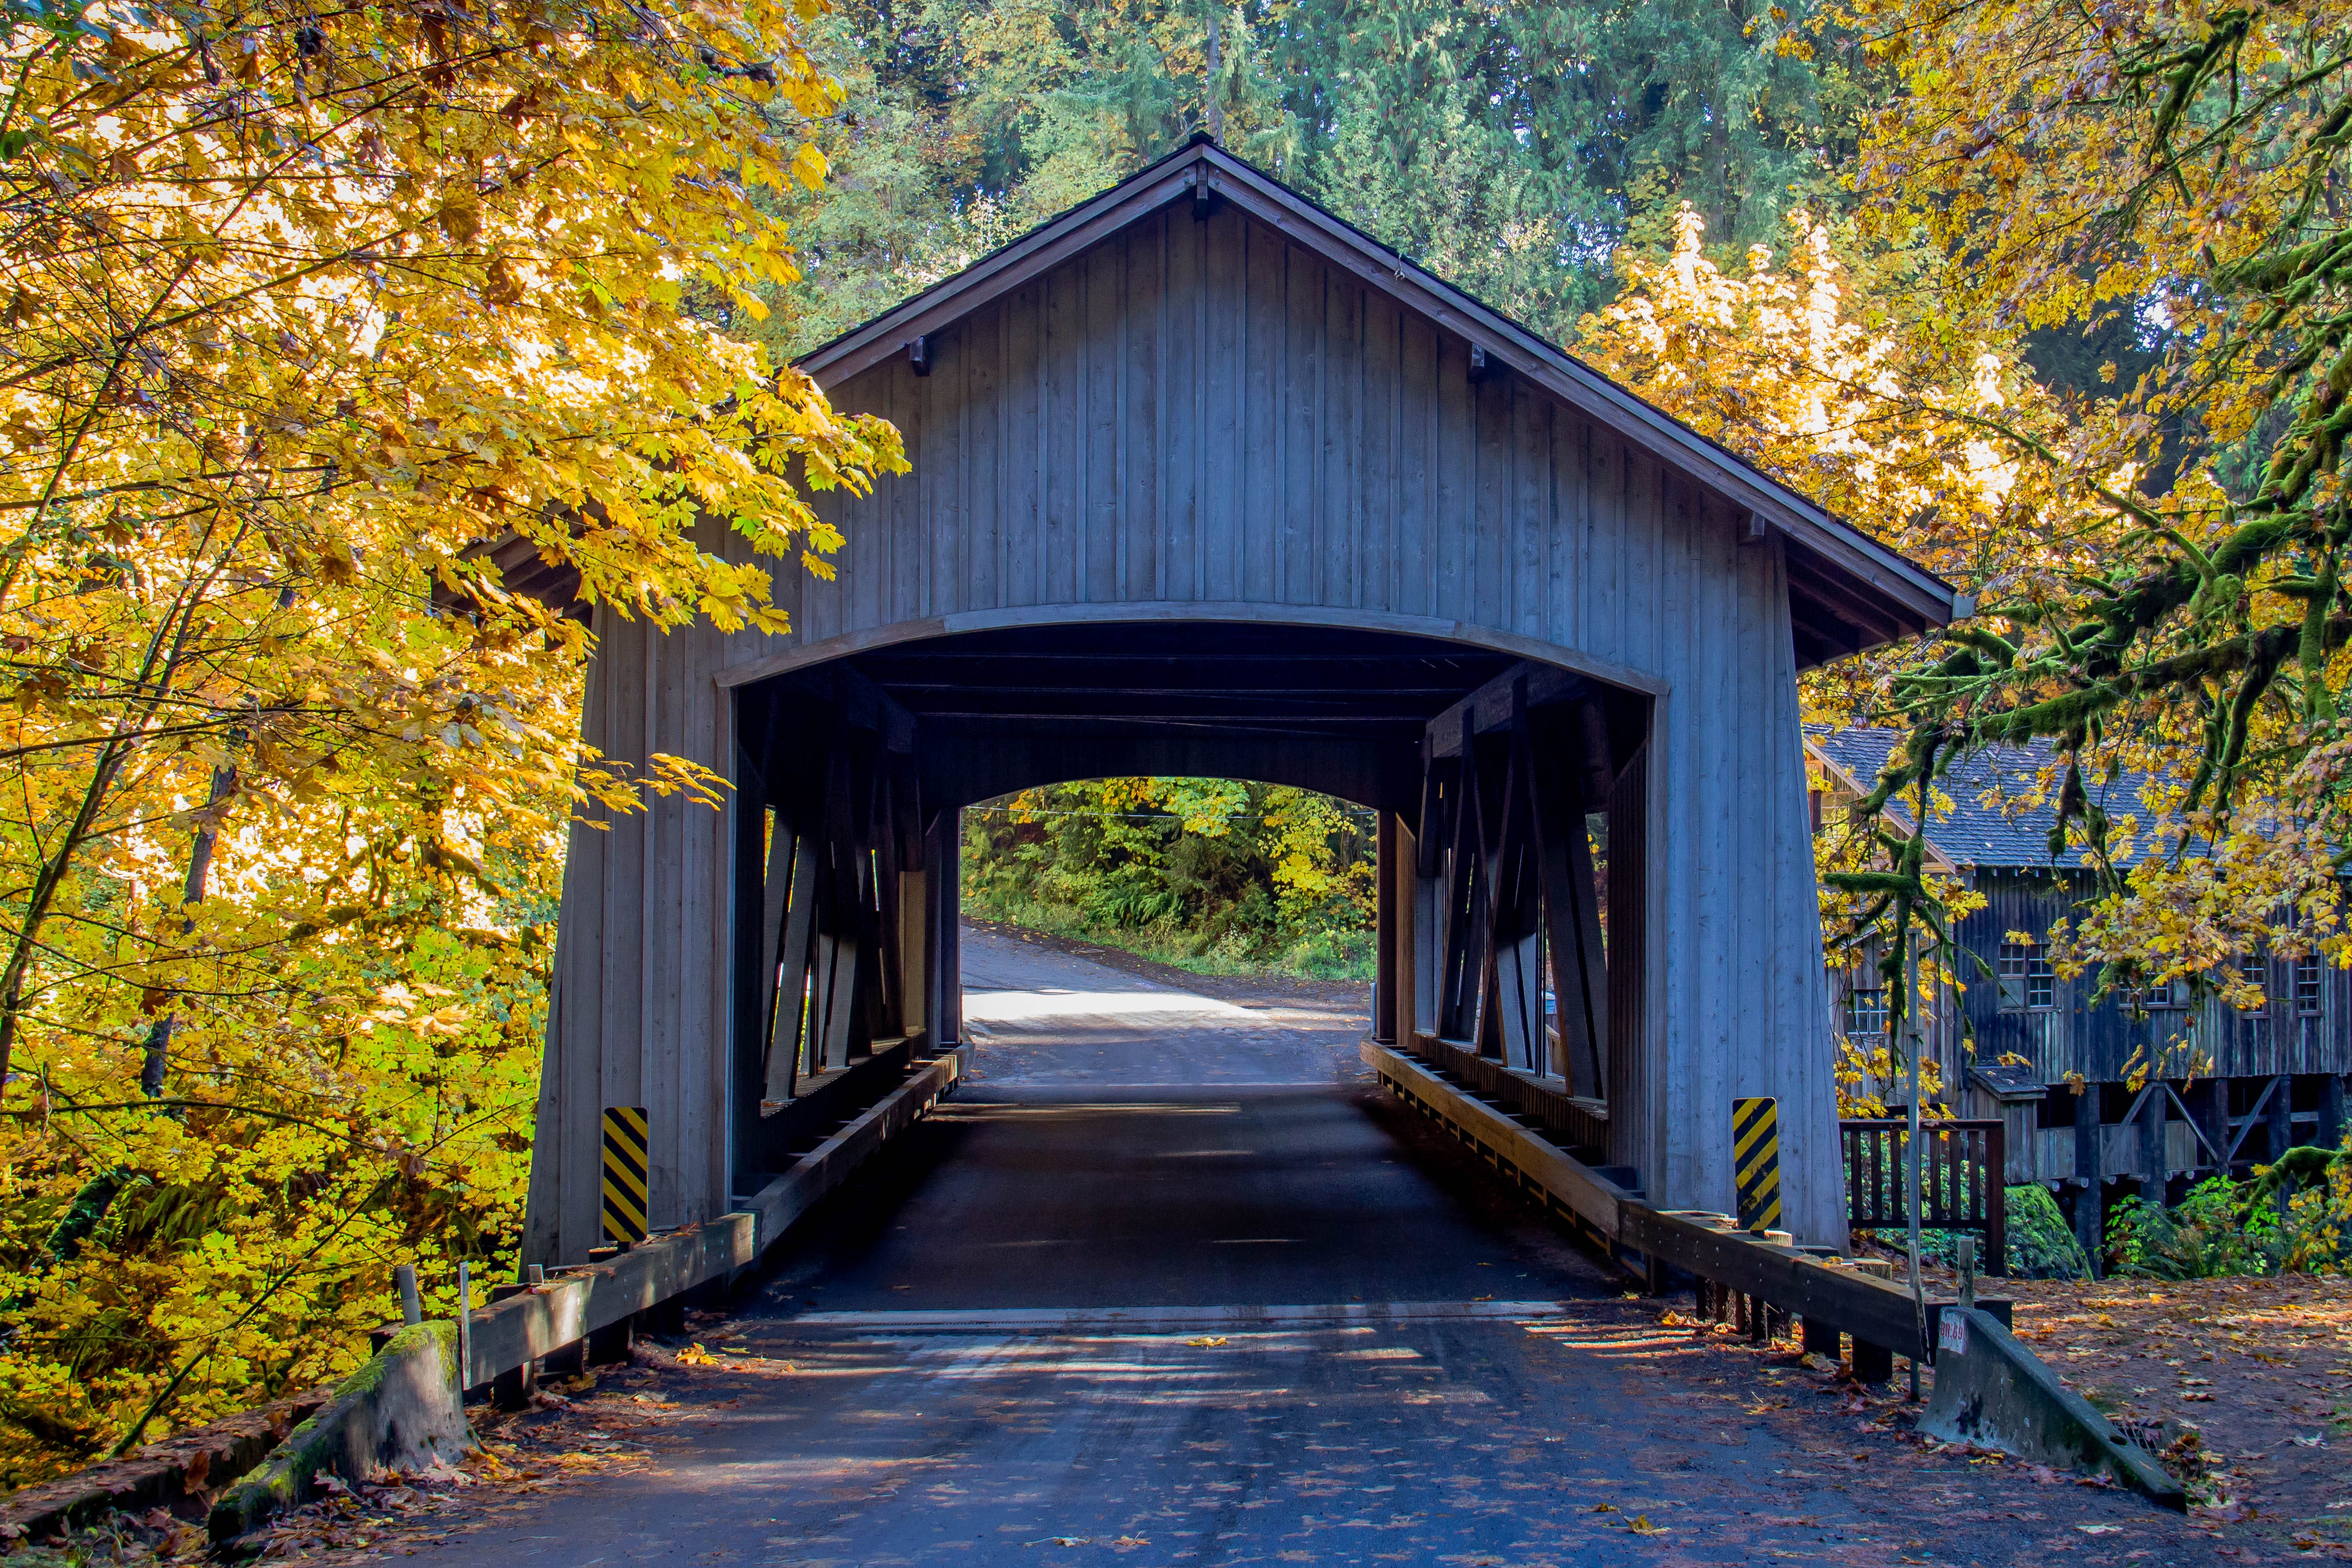 October reader photos: Bridges